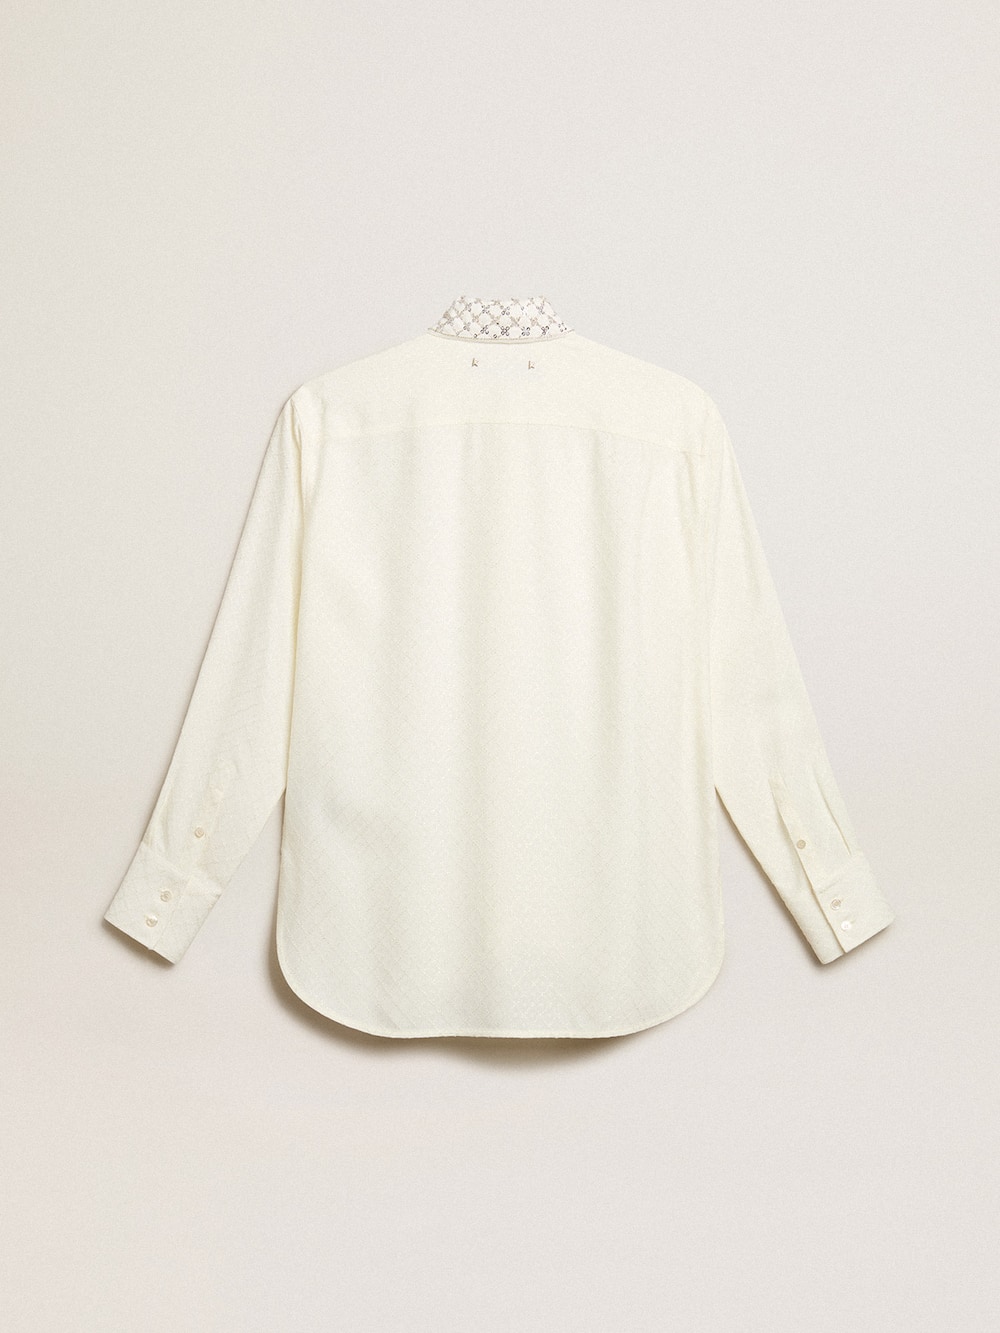 Golden Goose - Camicia color bianco antico con motivo jacquard e ricami in 